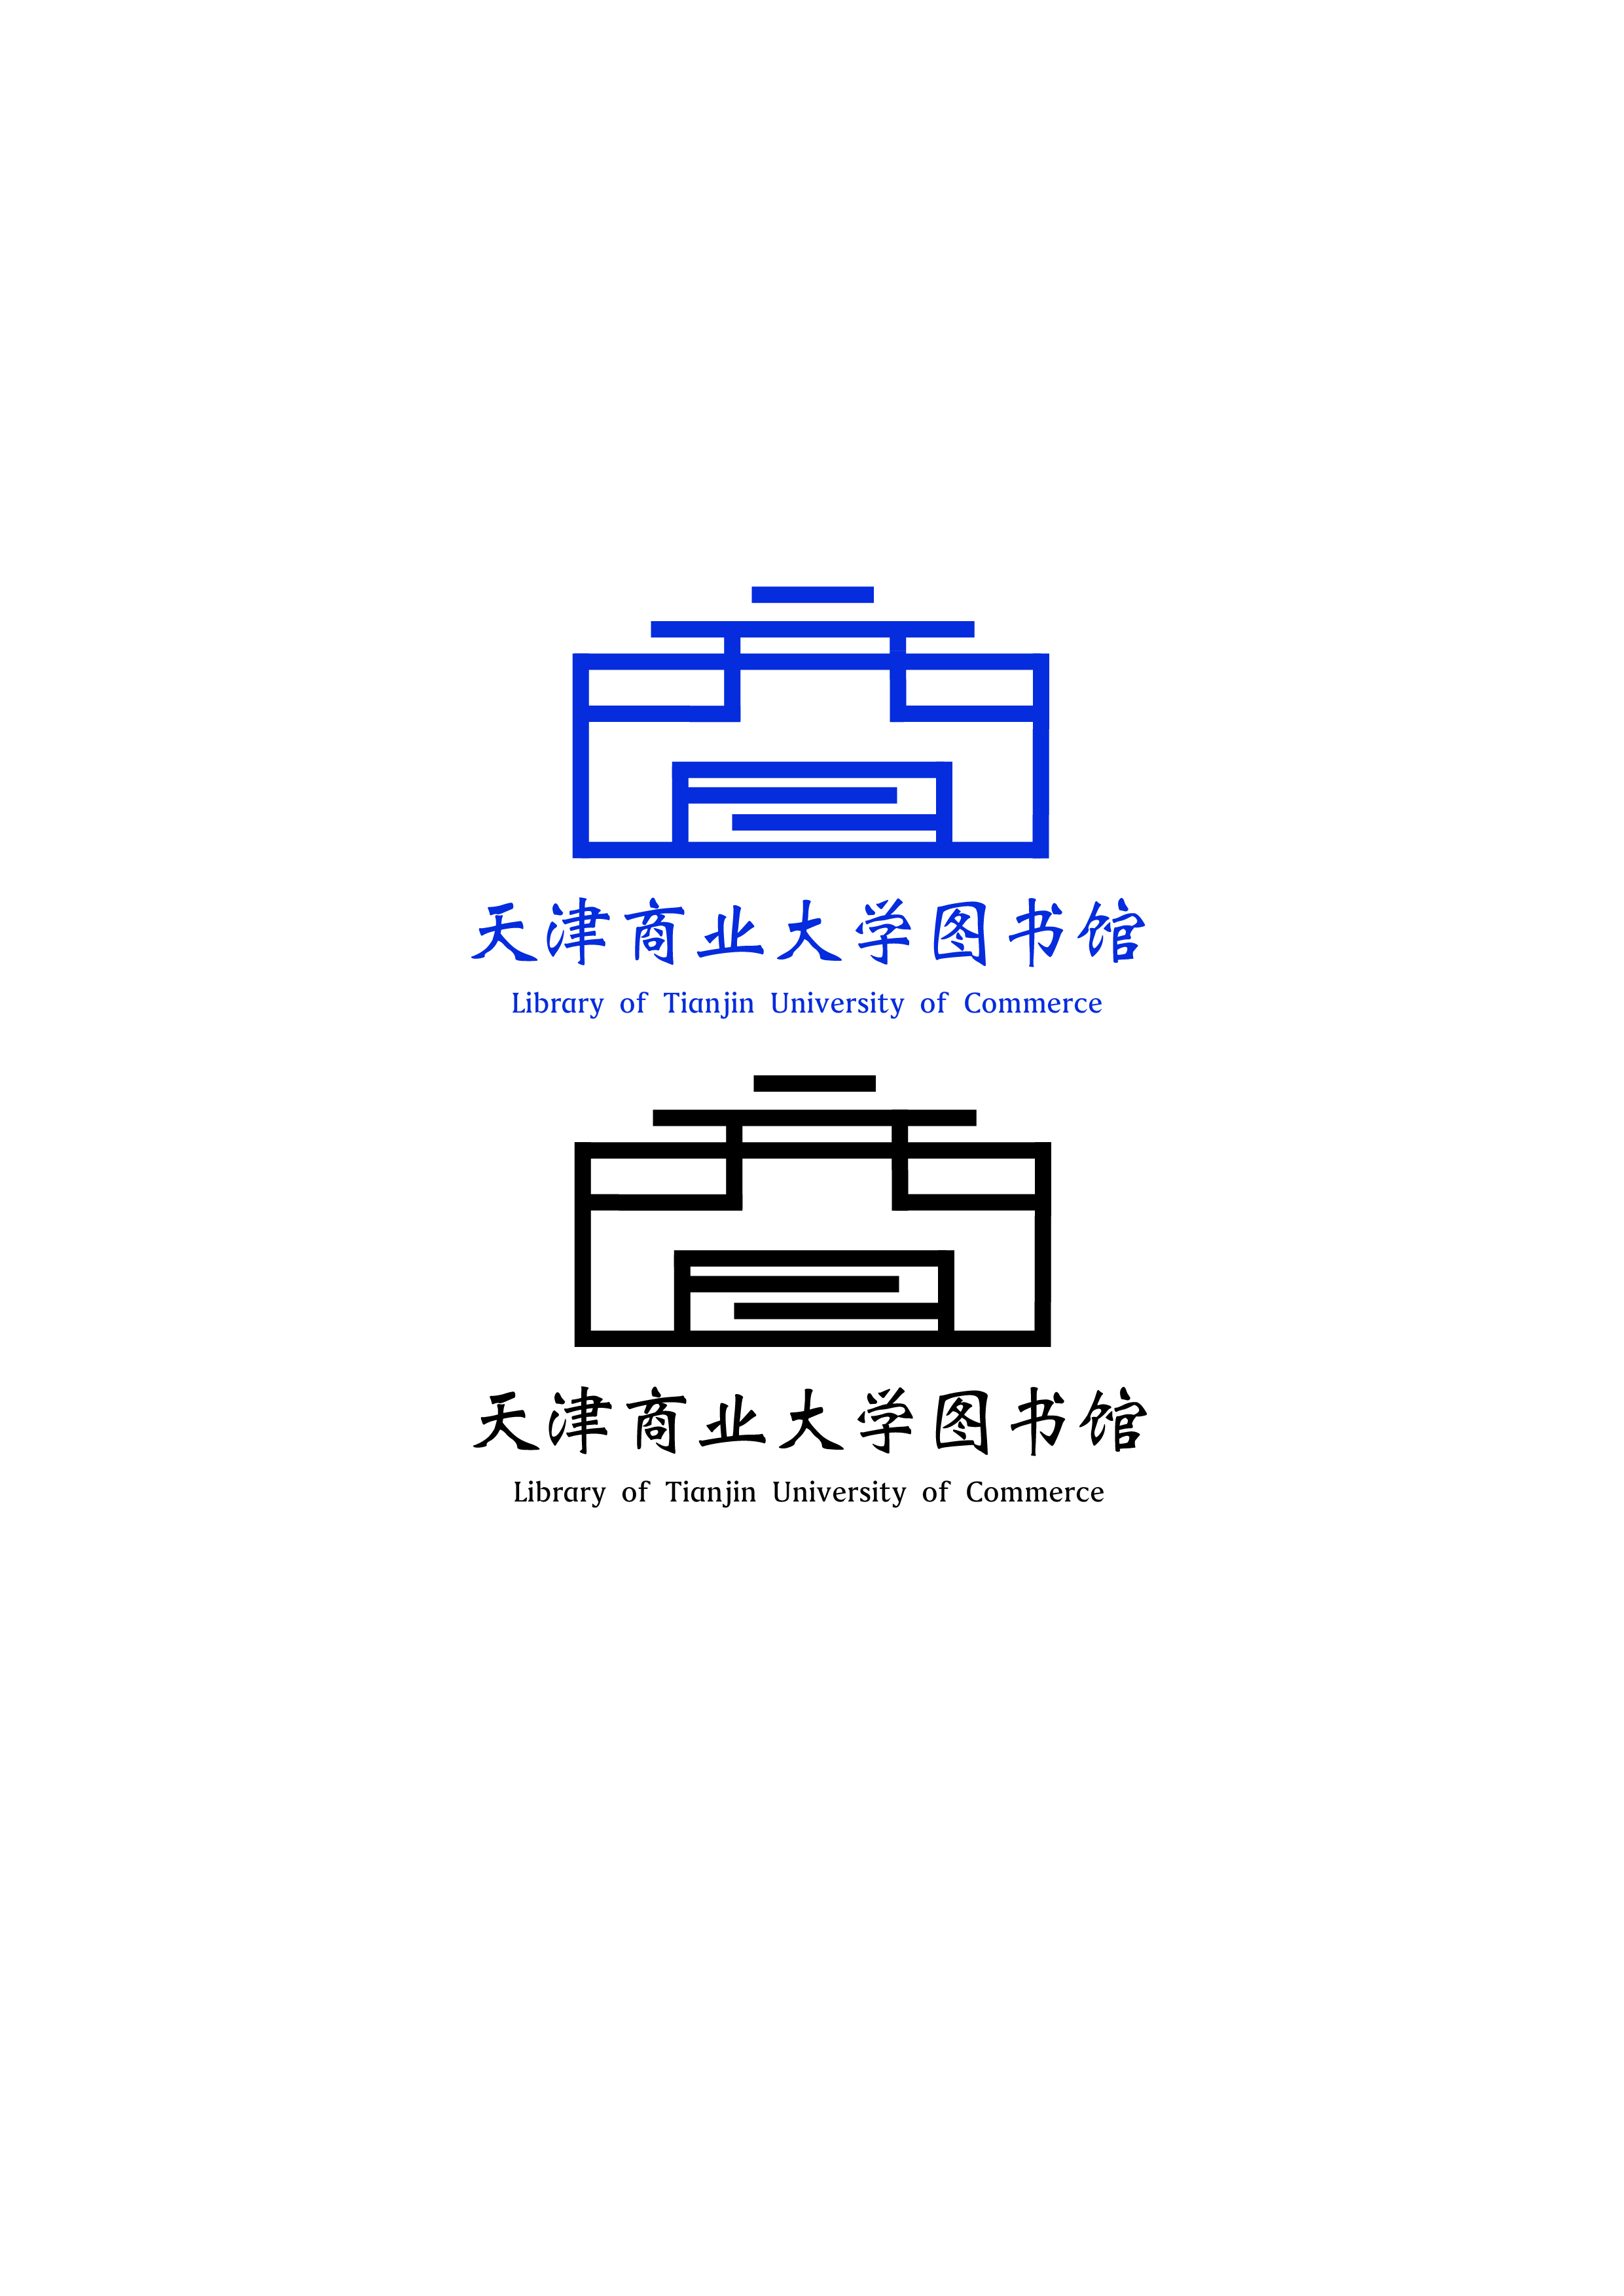 天津商业大学图标图片